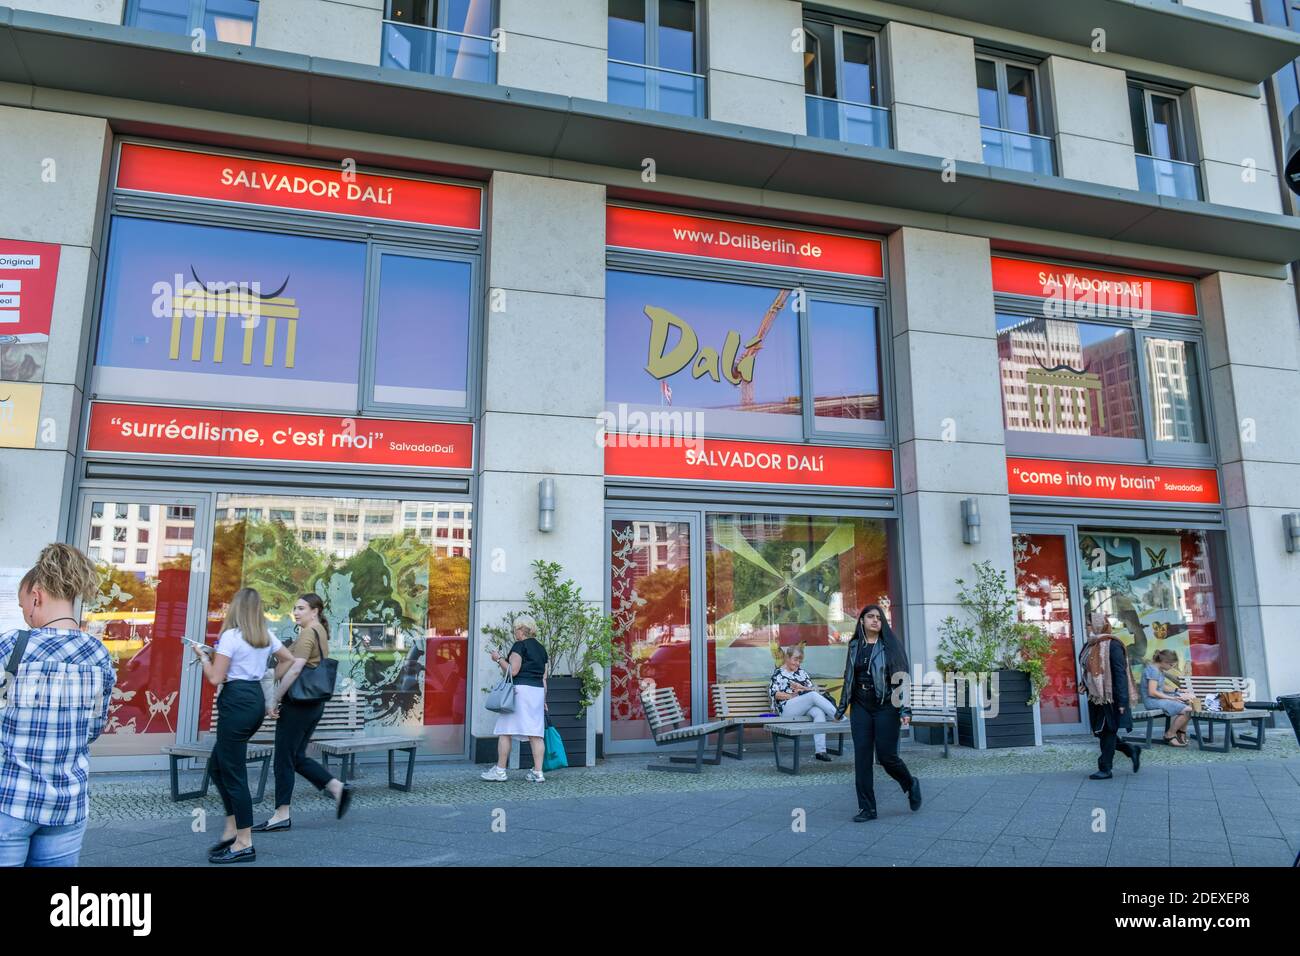 Kunstausstellung Salvador Dali, Leipziger Platz, Mitte, Berlin, Allemagne Banque D'Images